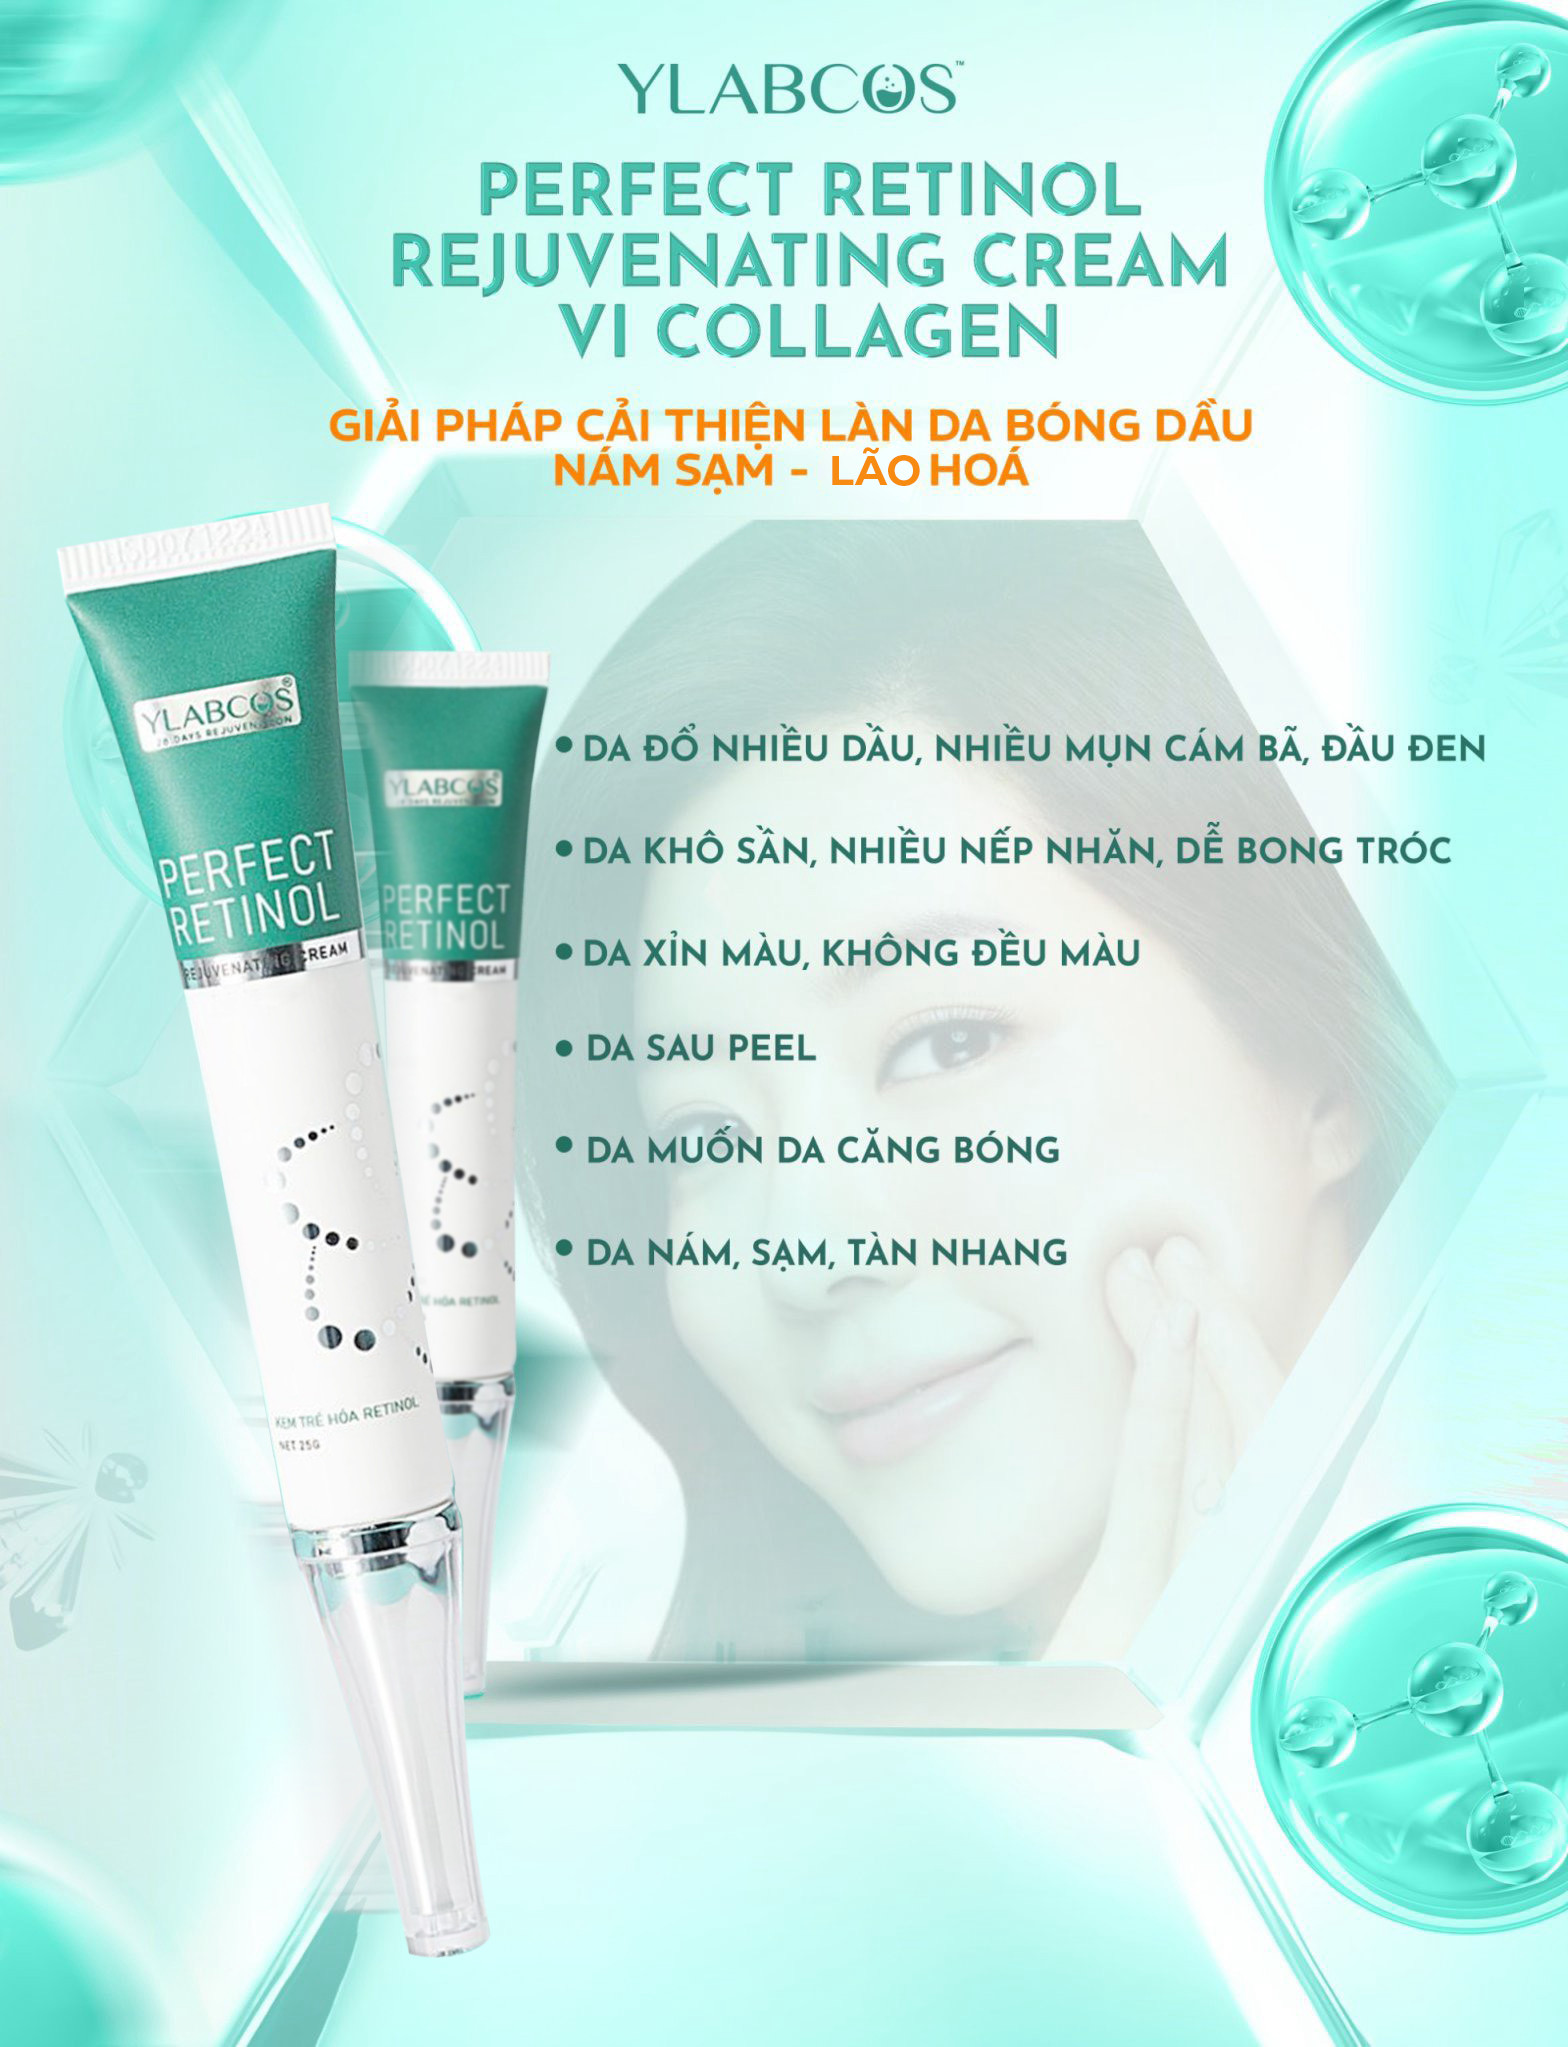 VI COLLAGEN PERFECT RETINOL YLABCOS Rejuvenating Cream - Peel da thế hệ mới  - ViGai Collagen Drlacir